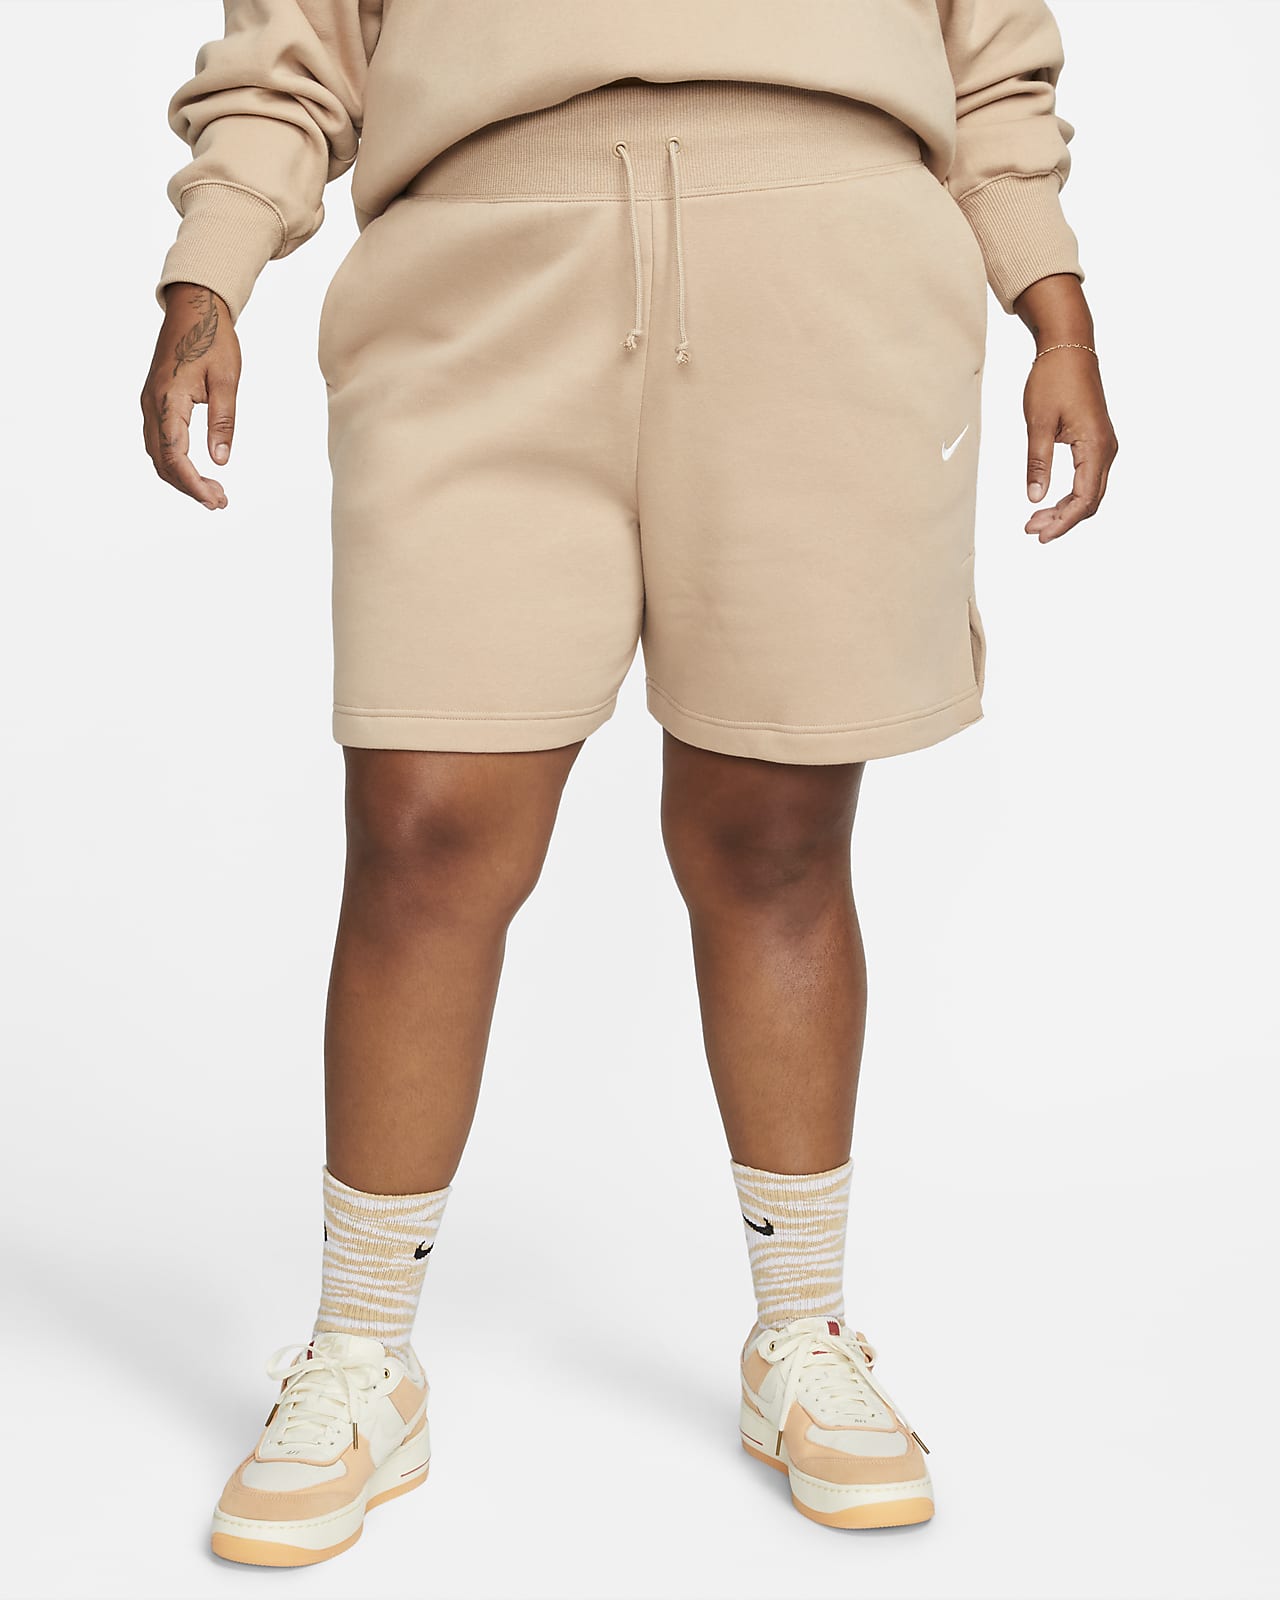 Nike Sportswear Phoenix Fleece Pantalons curts d'ajust ample i cintura alta (Talles grans) - Dona